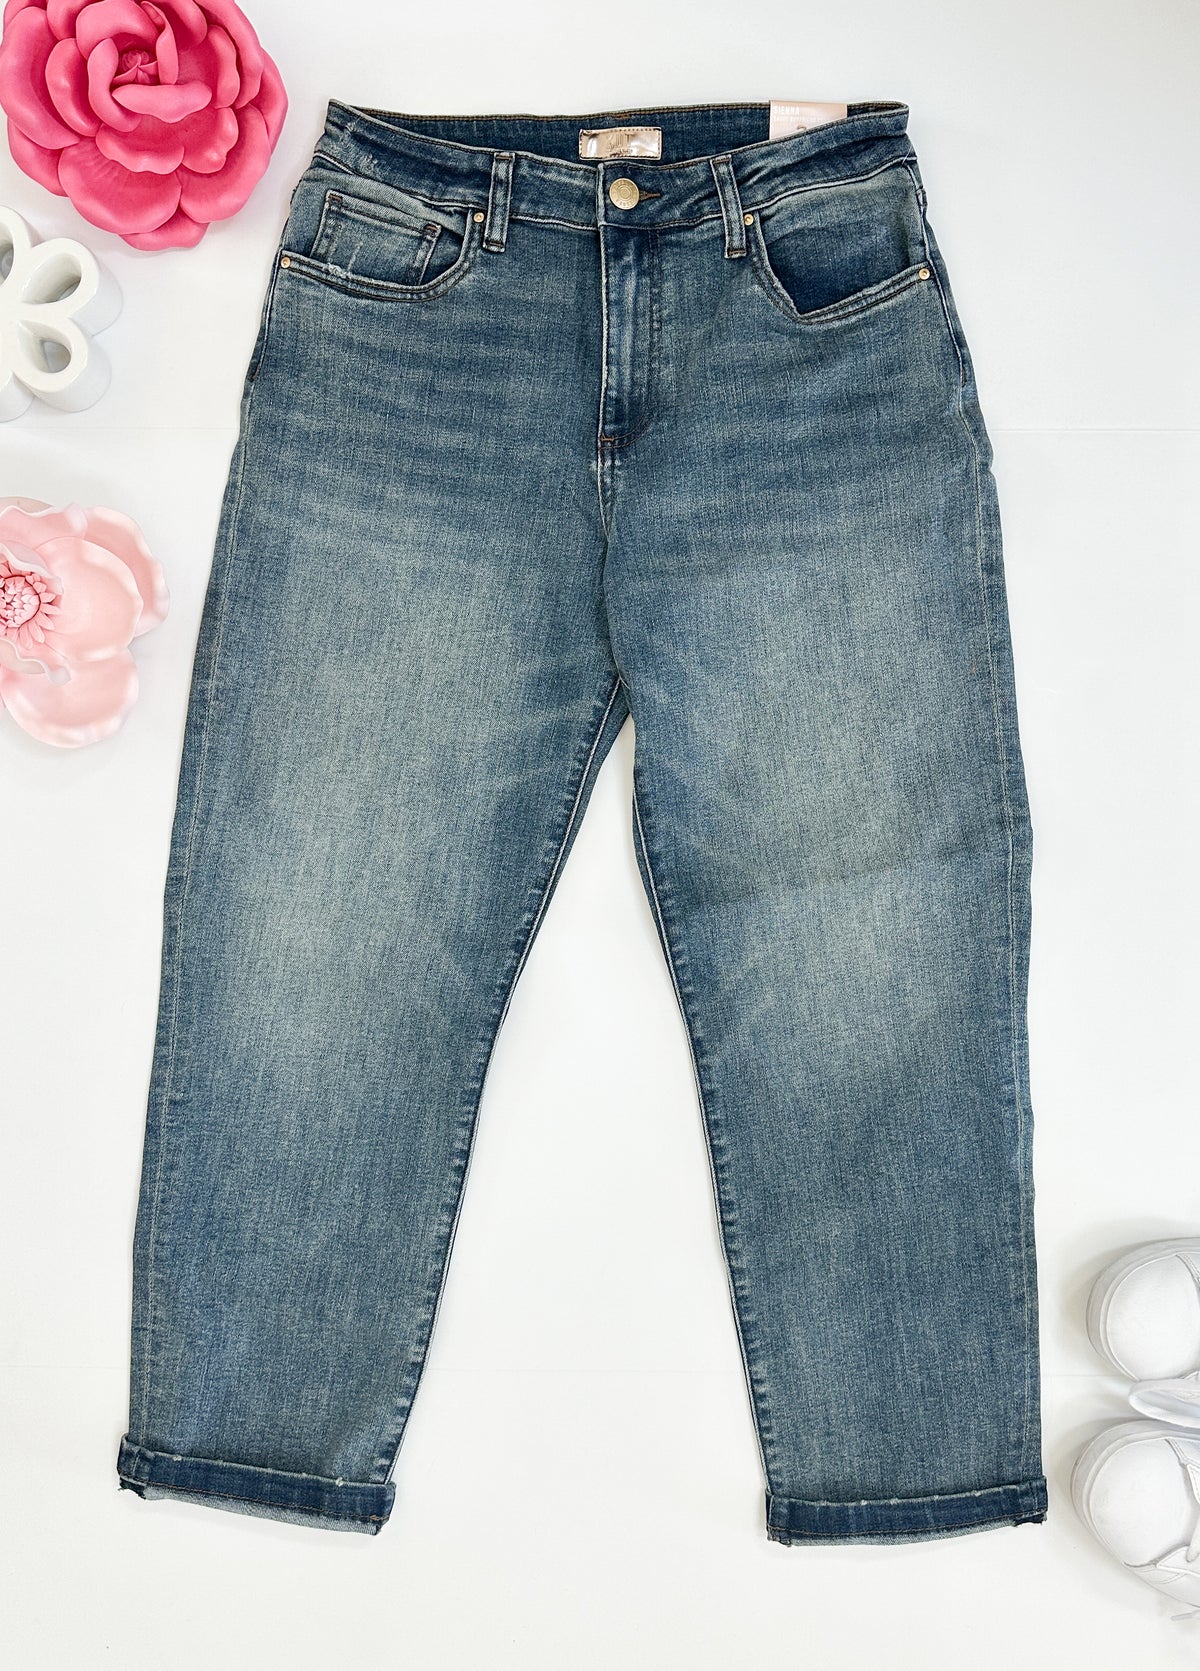 Sienna Baggy Boyfriend Crop Jeans by Kut from the Kloth